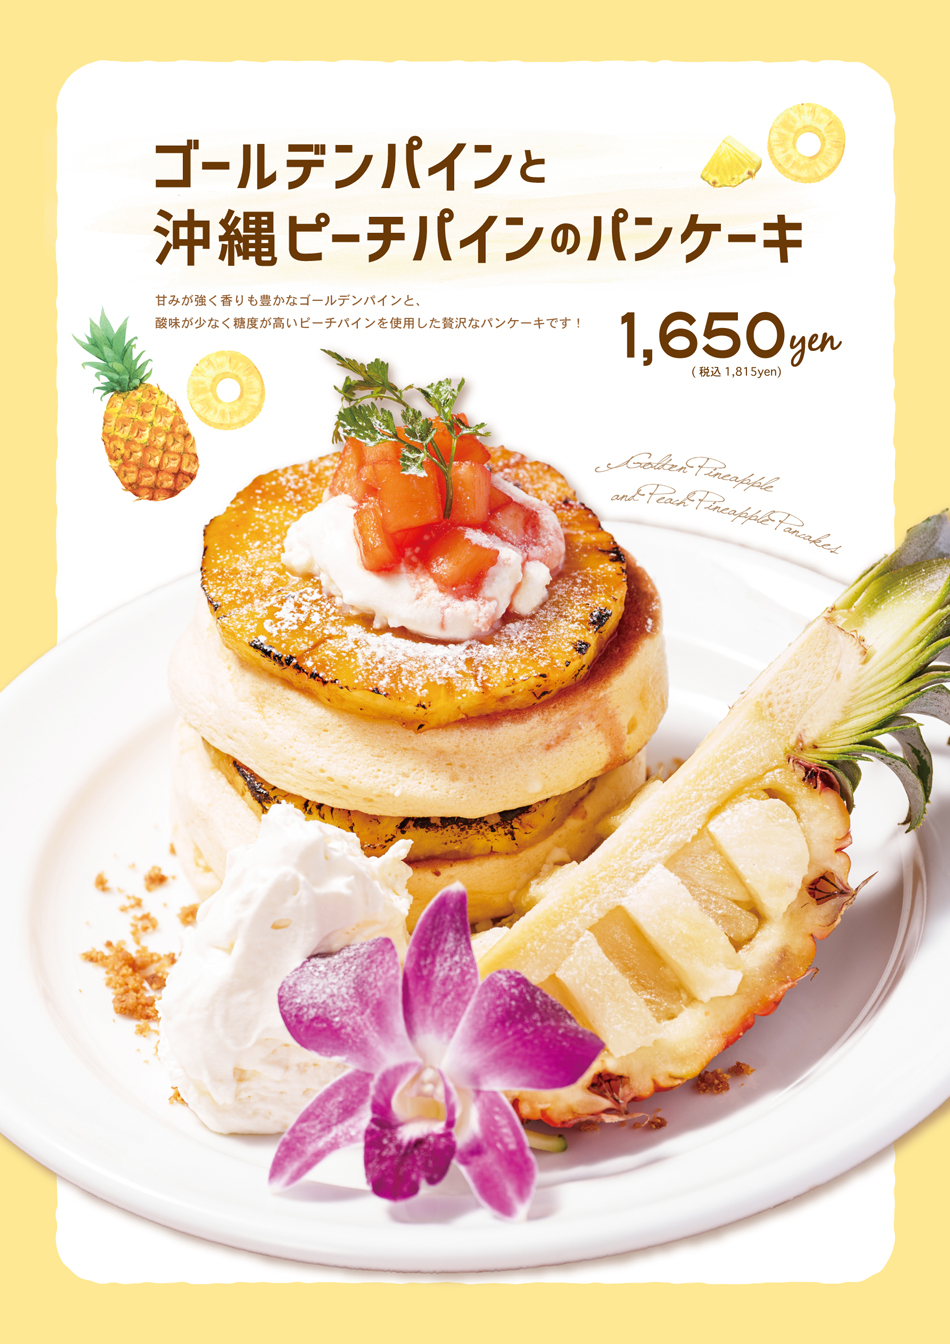 Merengue 季節パンケーキ「ゴールデンパインと沖縄ピーチパインのパンケーキ」フェア開催！